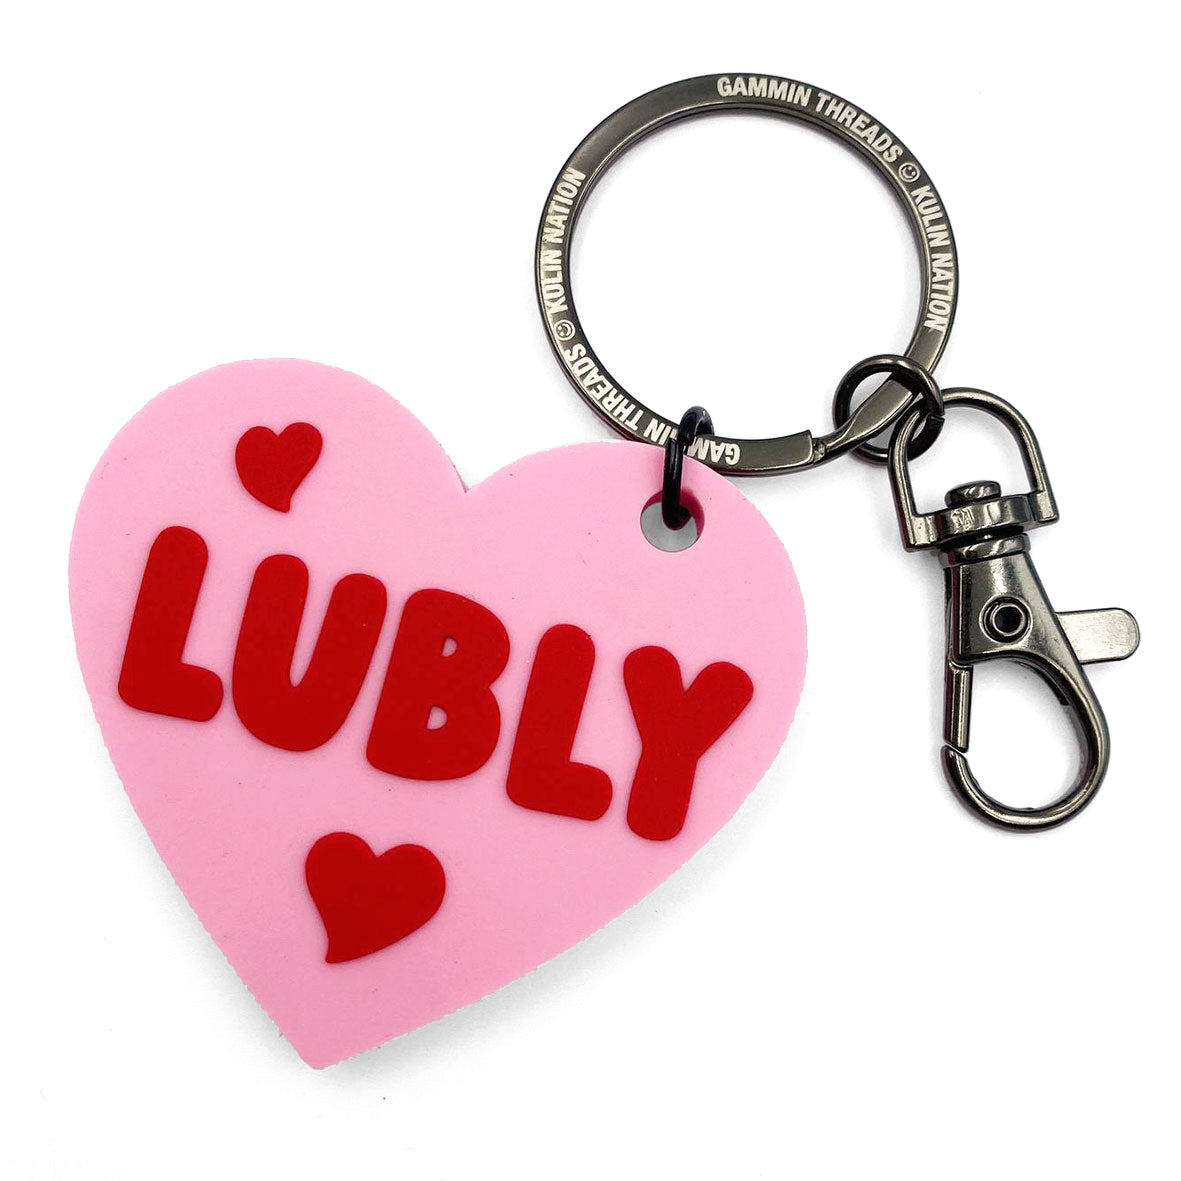 lubly-key_1.jpg